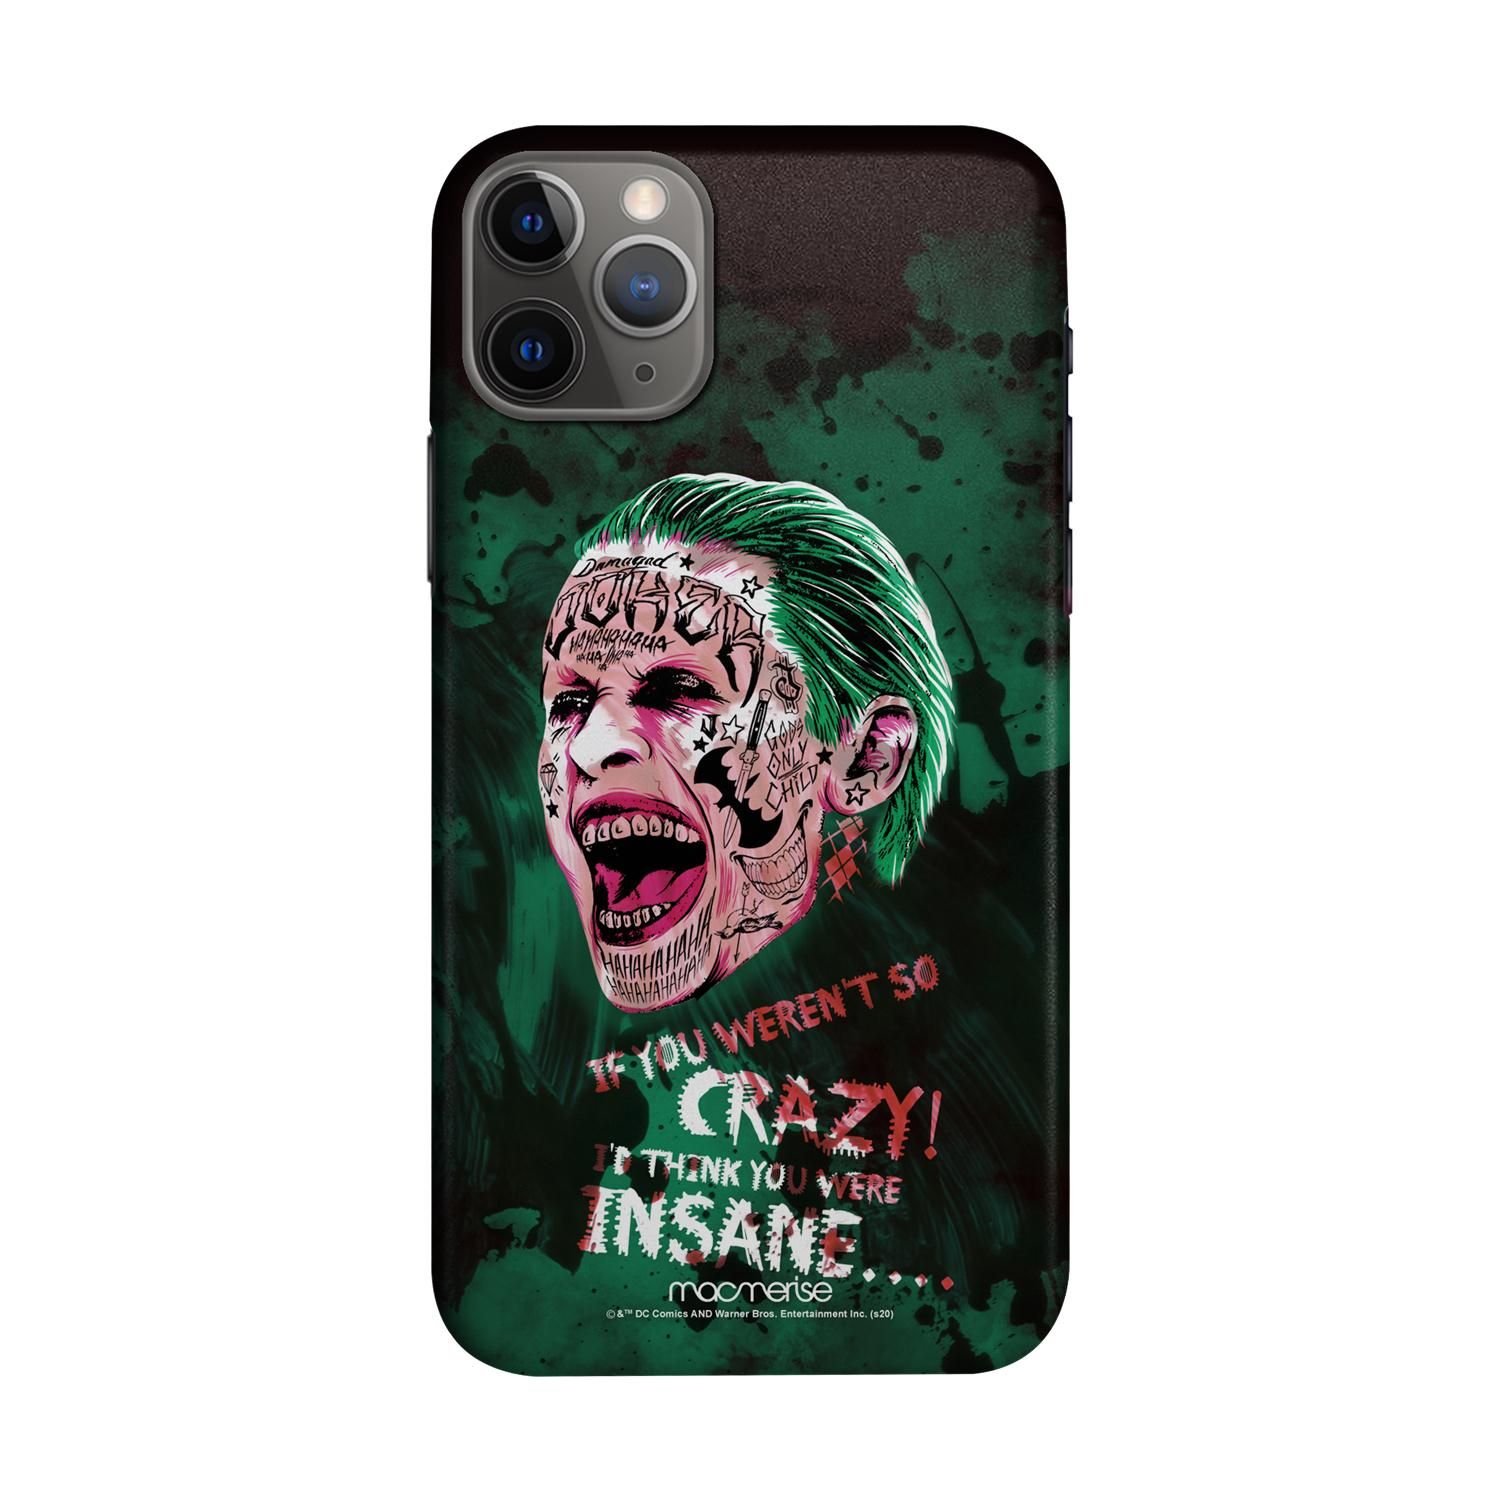 Buy Crazy Insane Joker - Sleek Phone Case for iPhone 11 Pro Max Online